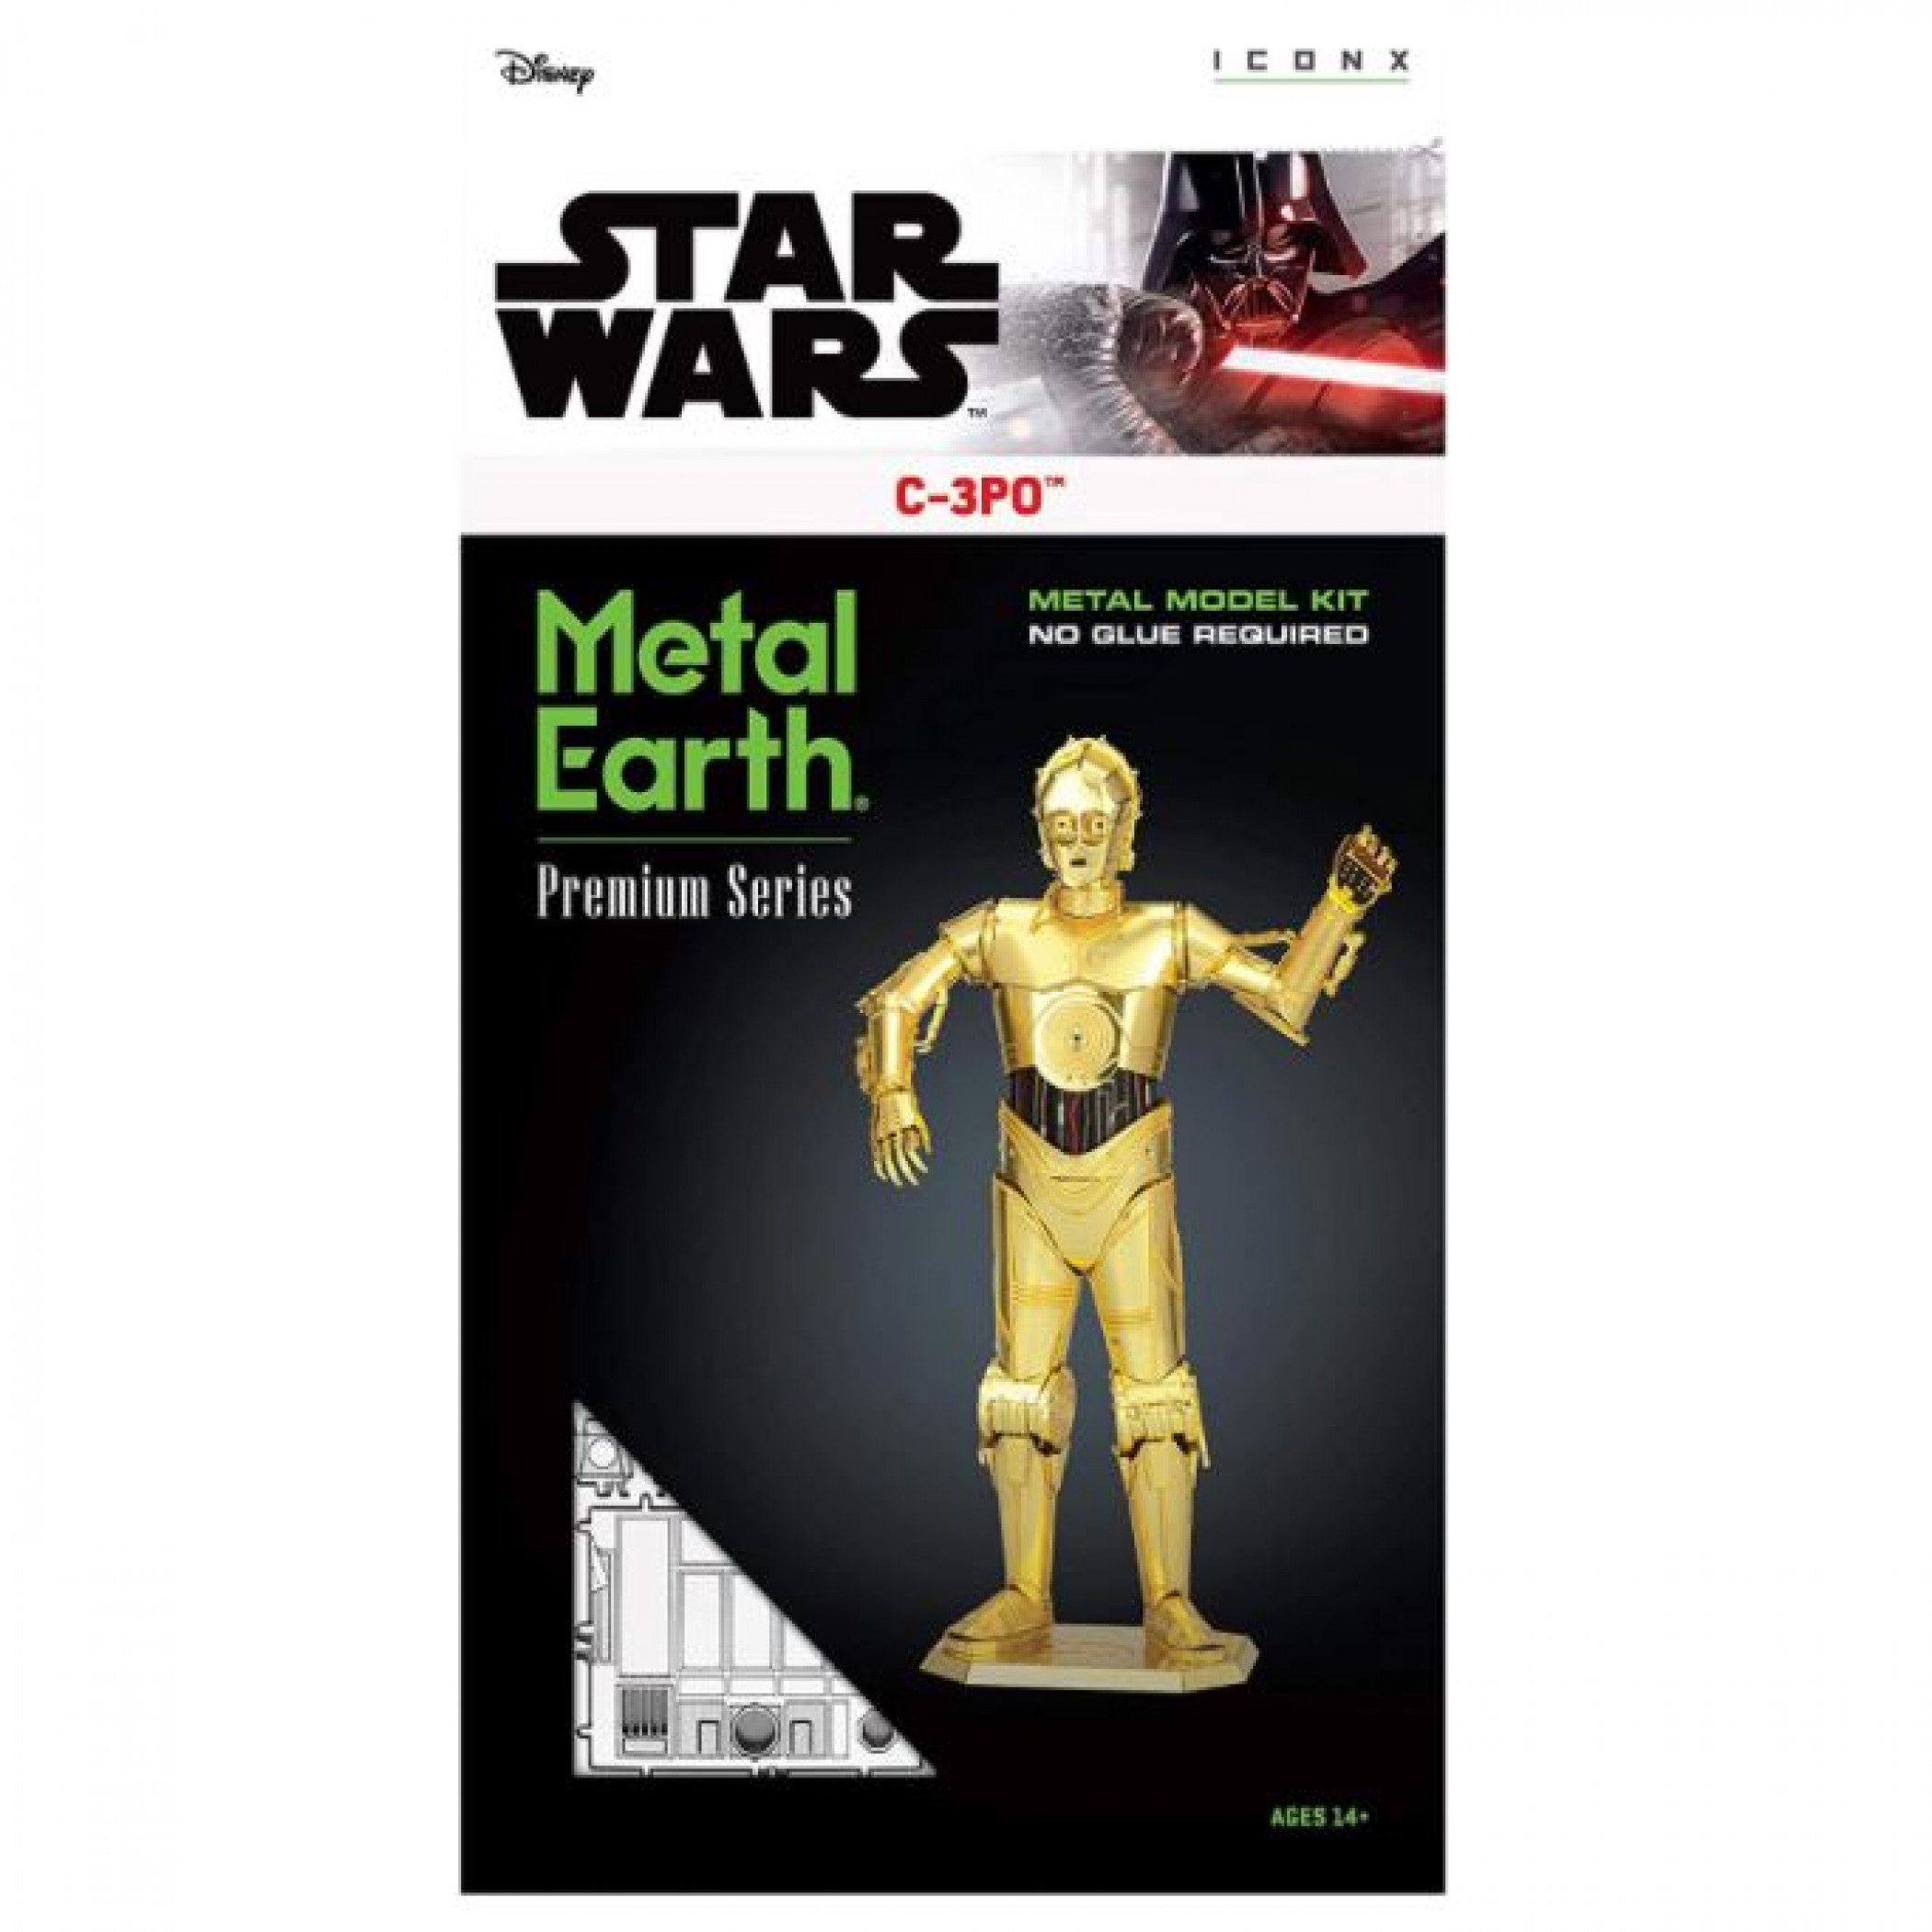 Star Wars C-3PO Character Premium 3D Metal Earth Model Kit